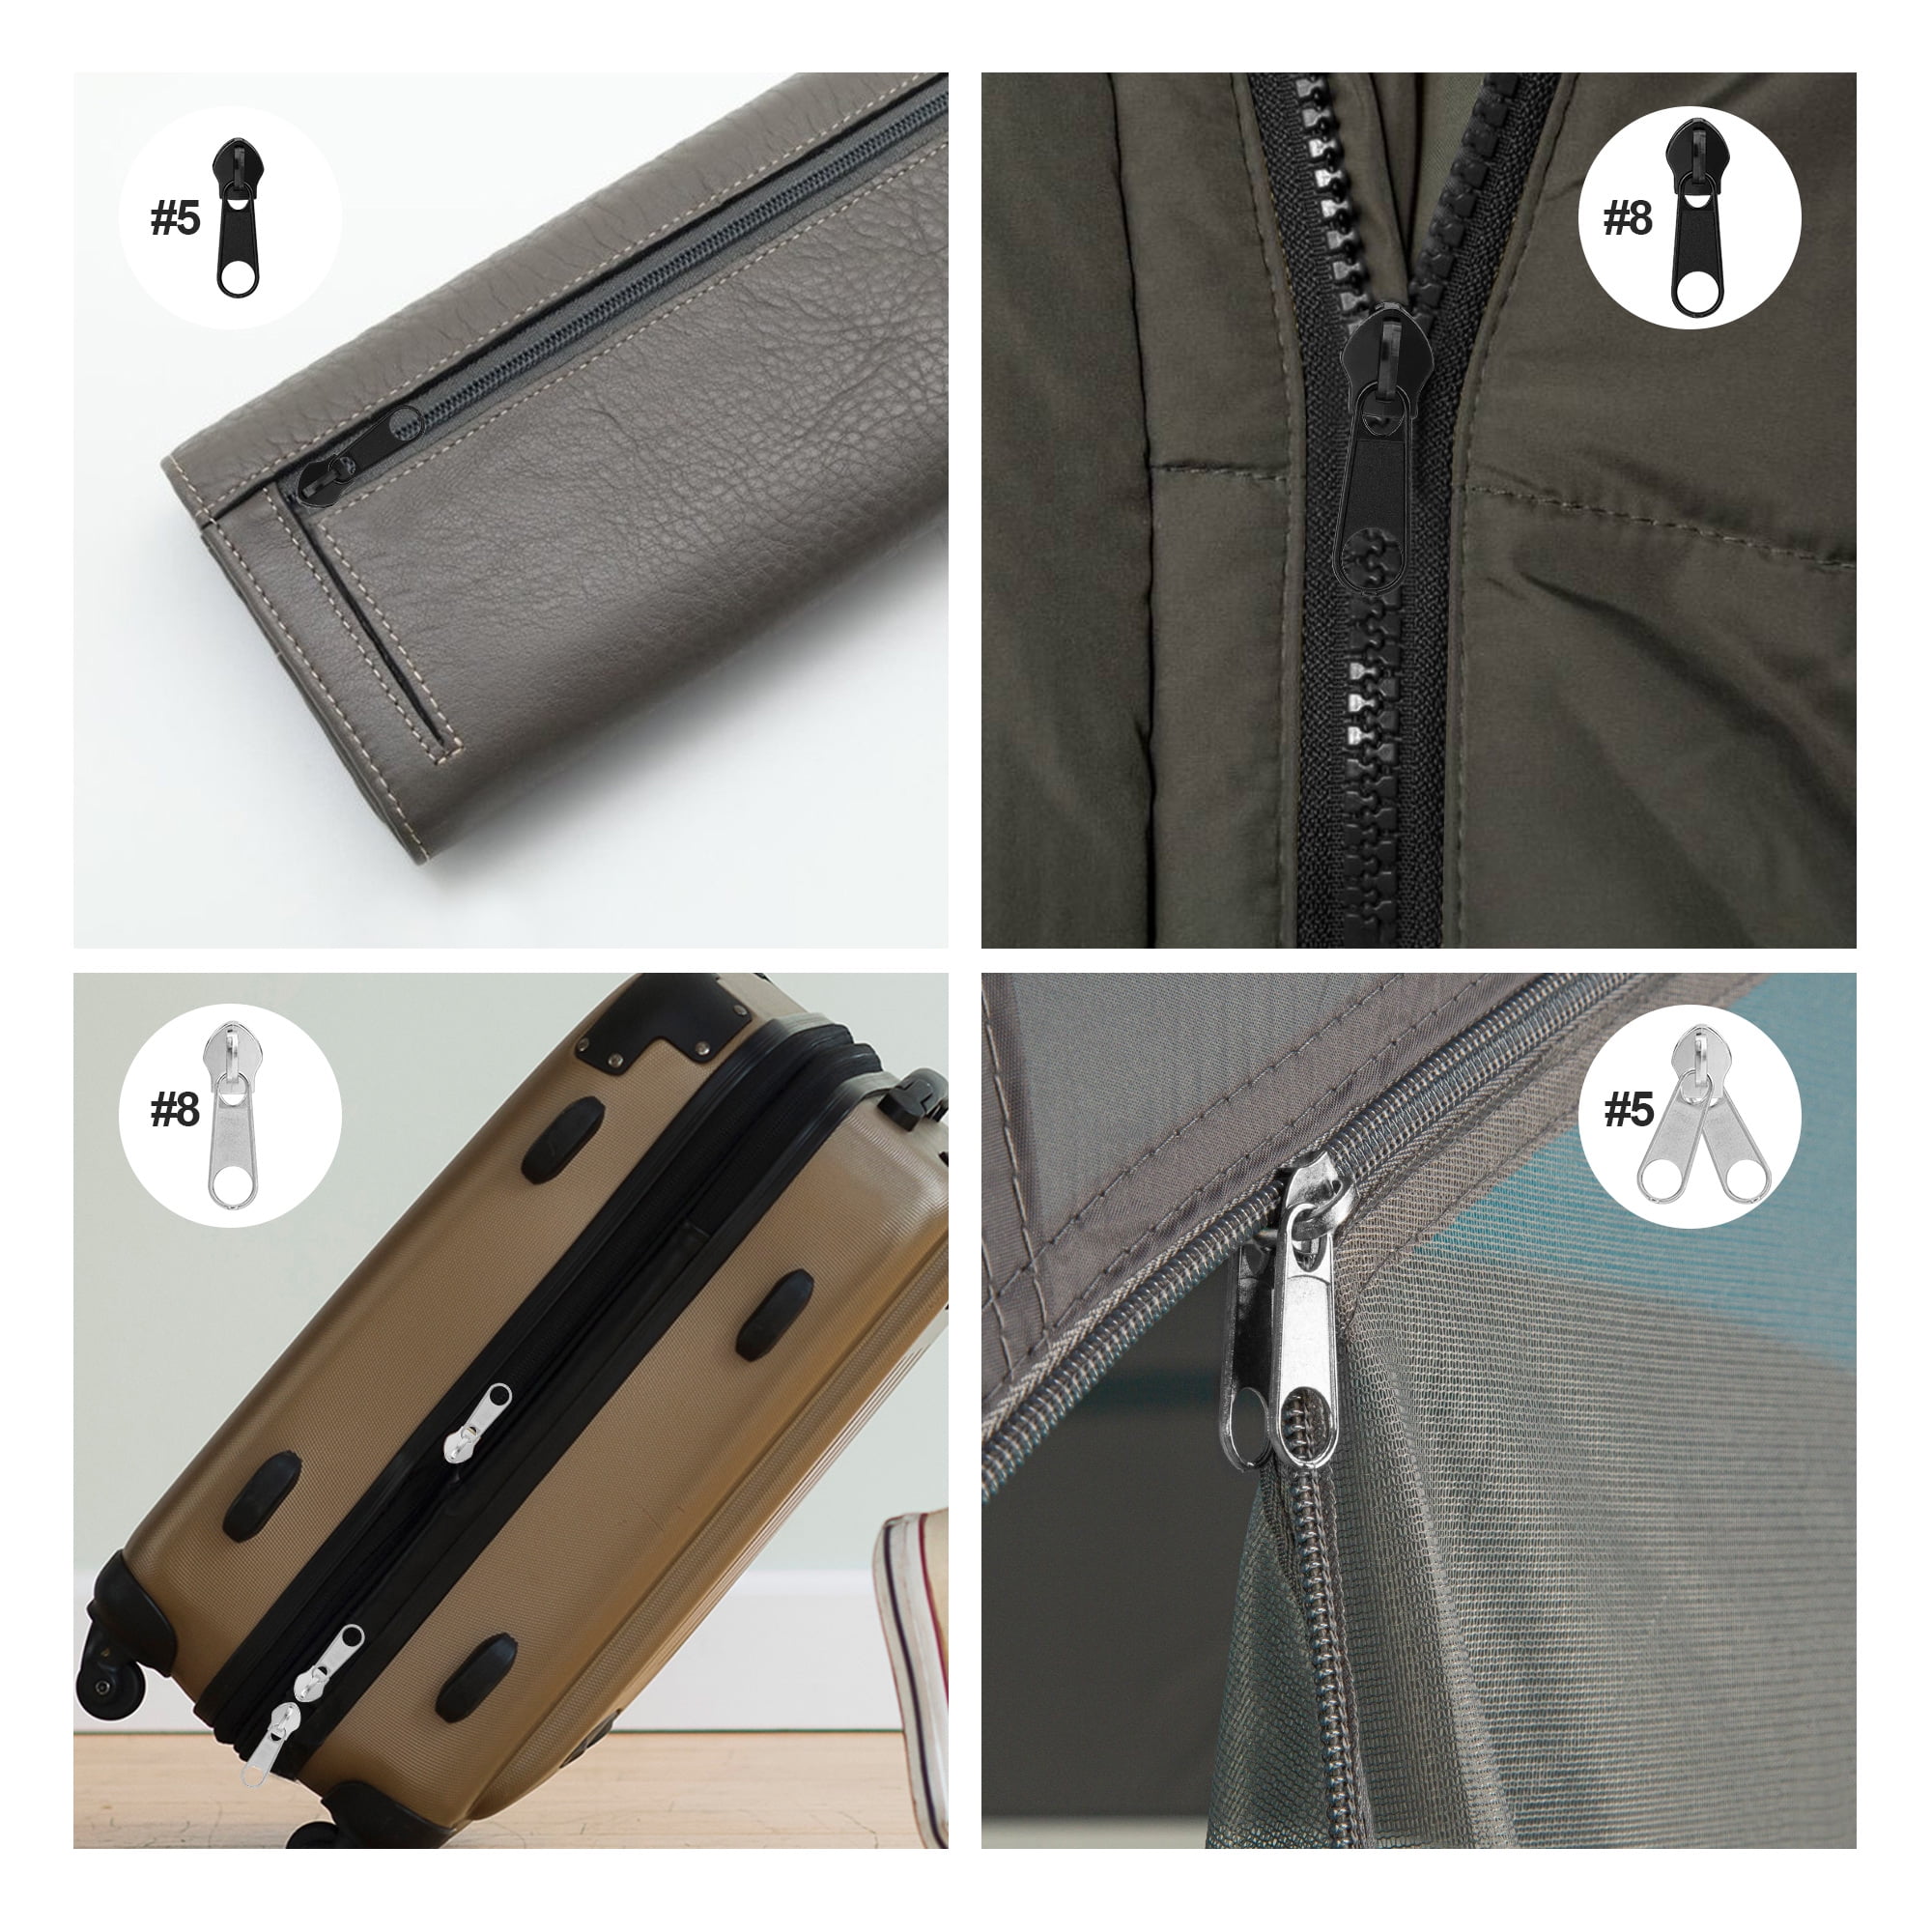 Zipper Repair Kit Zip Fix Headmetal Replacement Stopslider A Pin Insertion  Instantparts Ends Sewing Tent Accessories